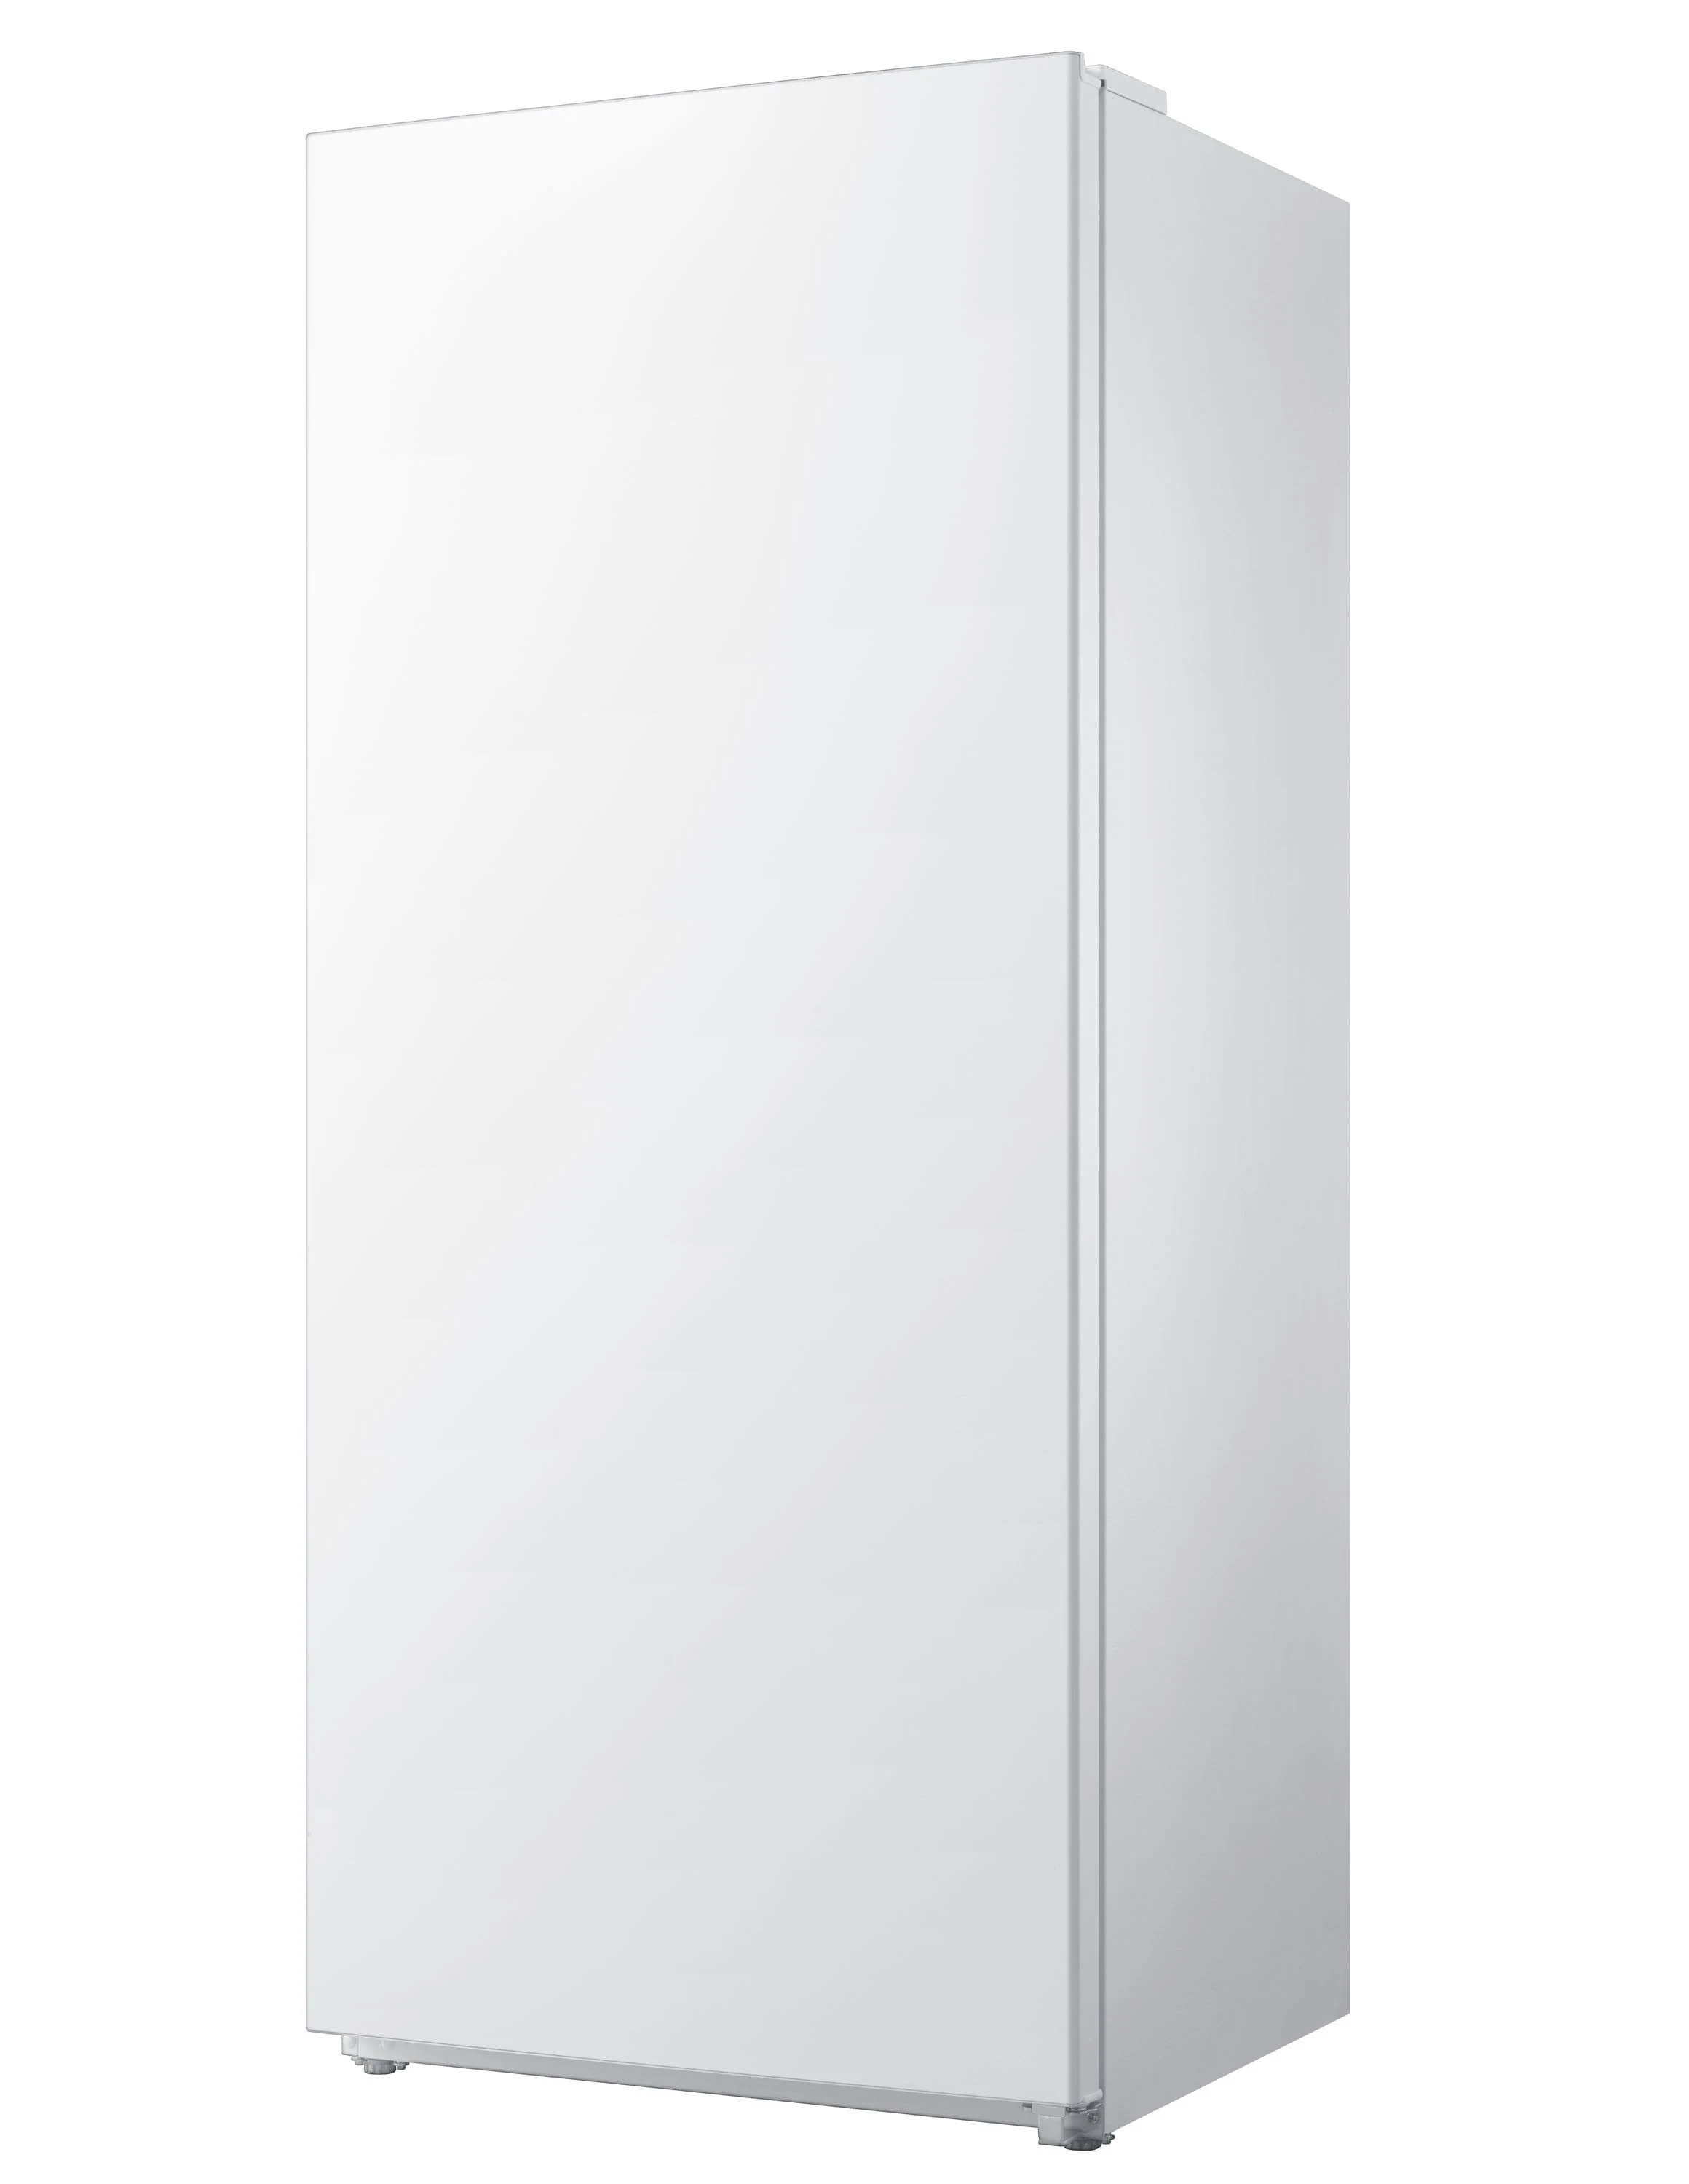 Midea MRU05M2AWW Upright Freezer, 5.3 cu.ft, White